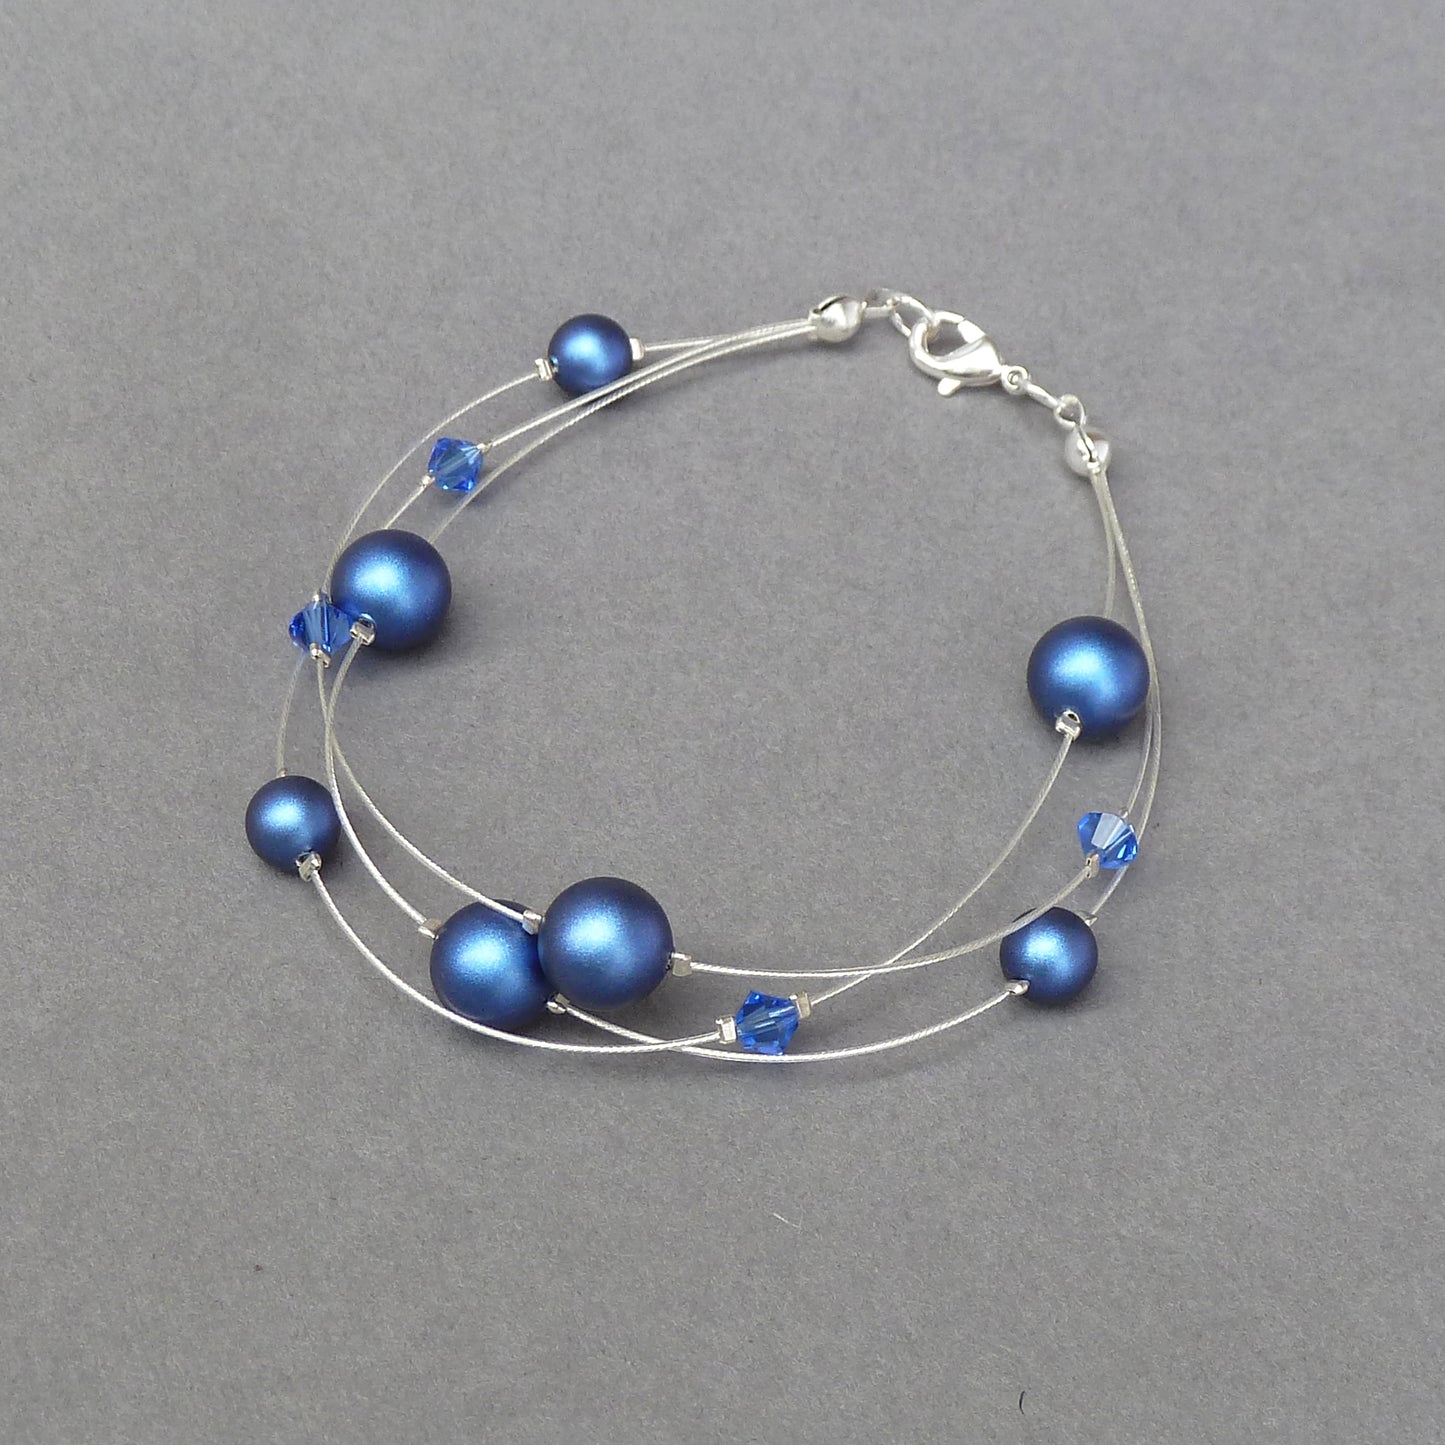 Cobalt blue bridesmaids bracelets for weddings